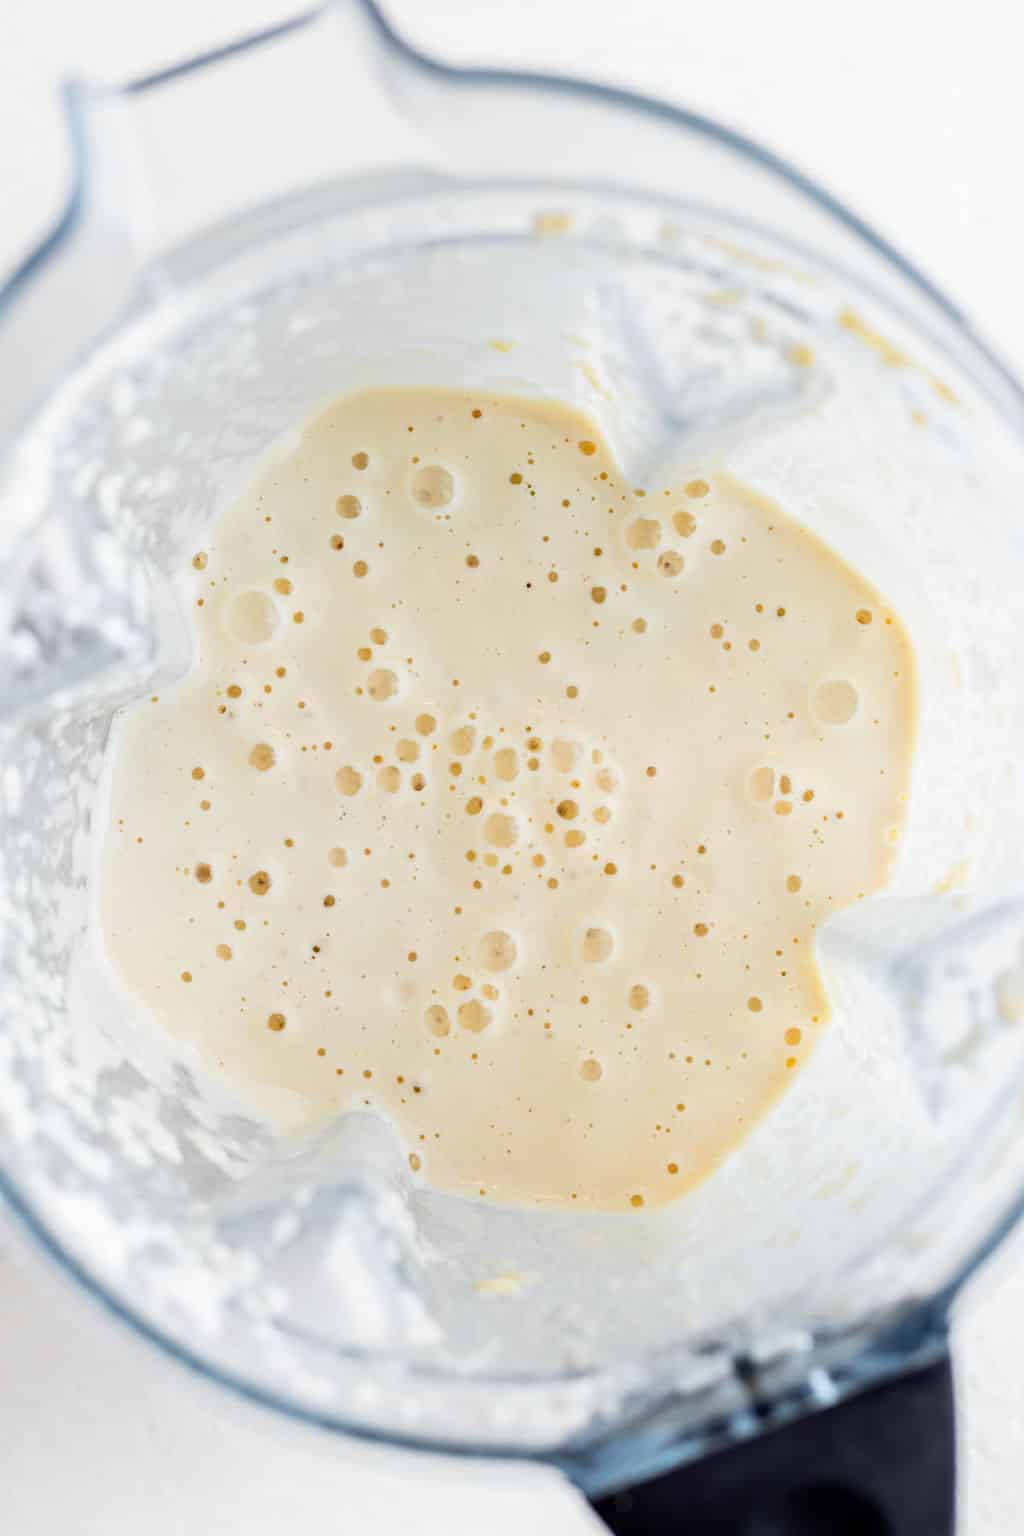 creamy white liquid in a blender.